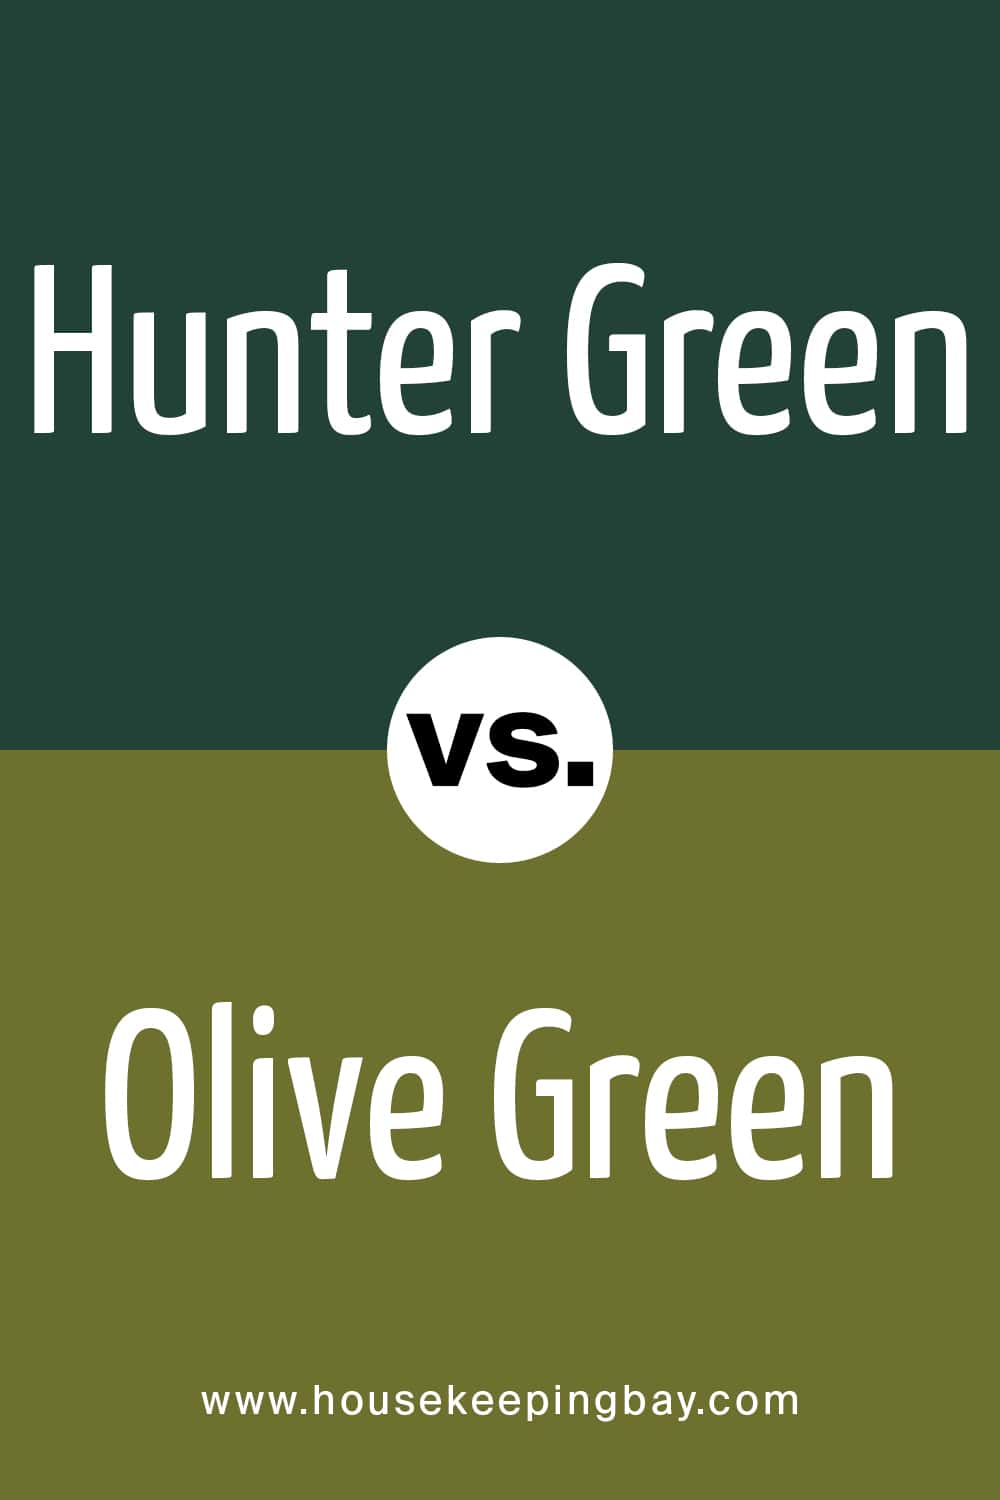 Hunter Green vs Olive Green